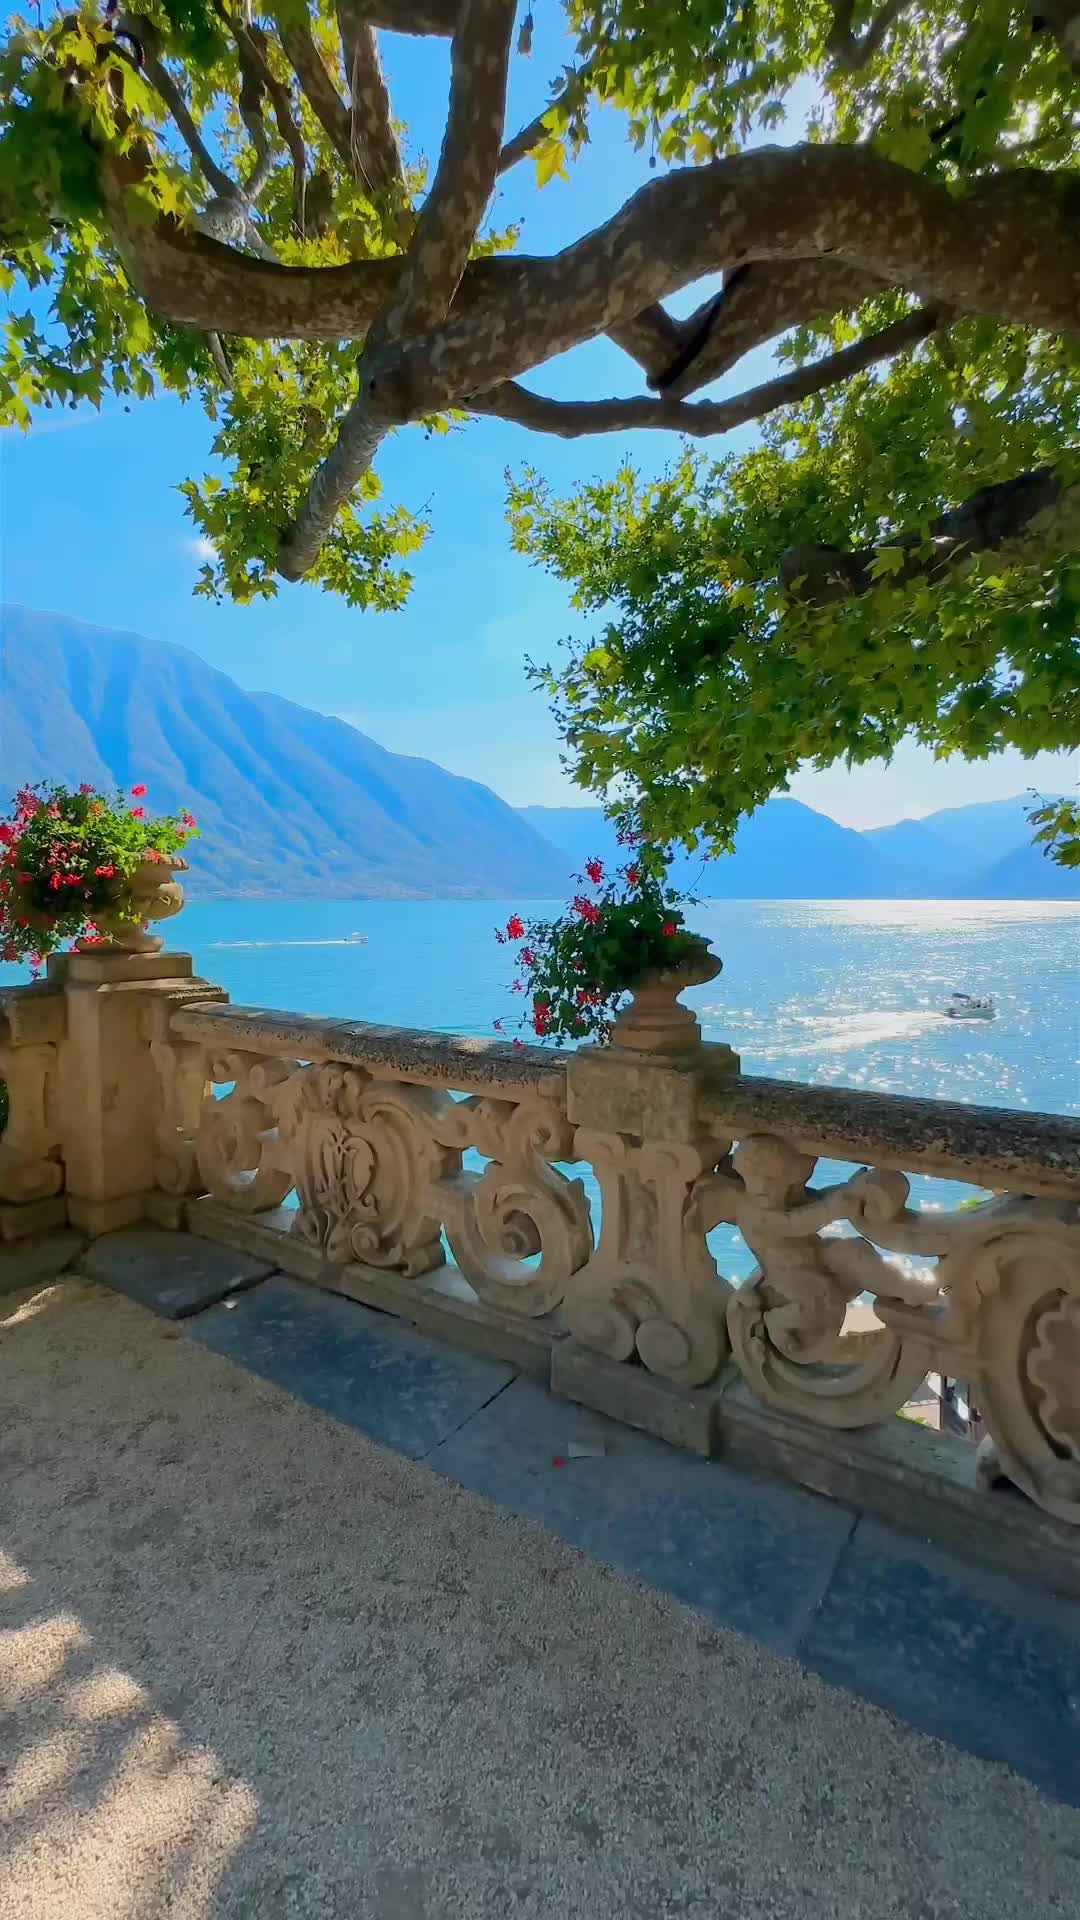 Enchanting Views at Villa del Balbianello, Lake Como